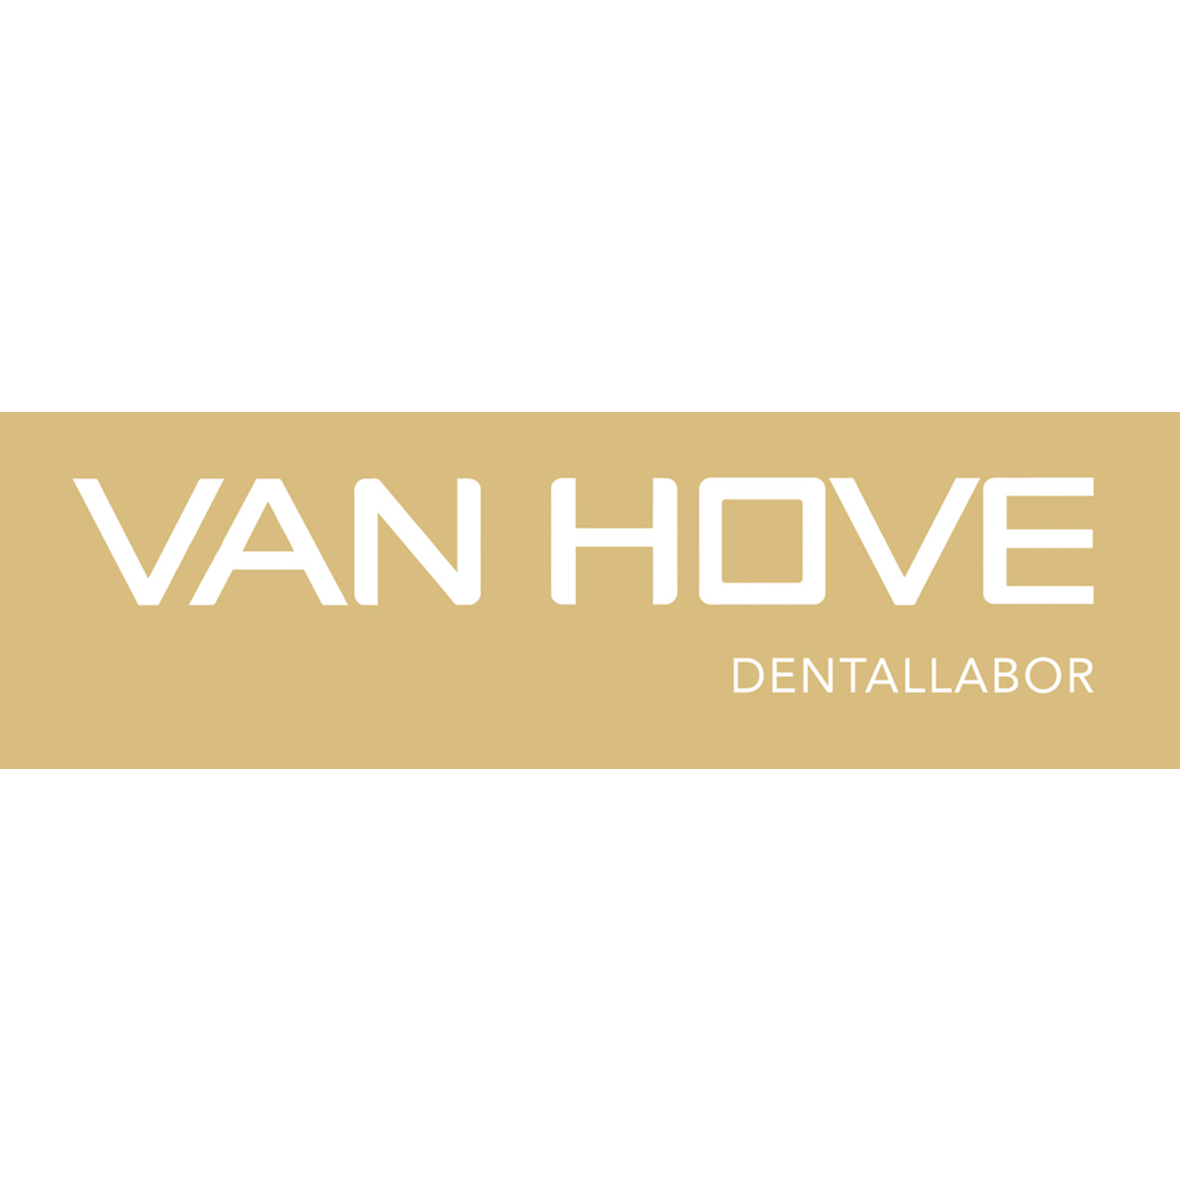 Dentallabor van Hove GmbH - Dental Laboratory - Münster - 0251 3929449 Germany | ShowMeLocal.com